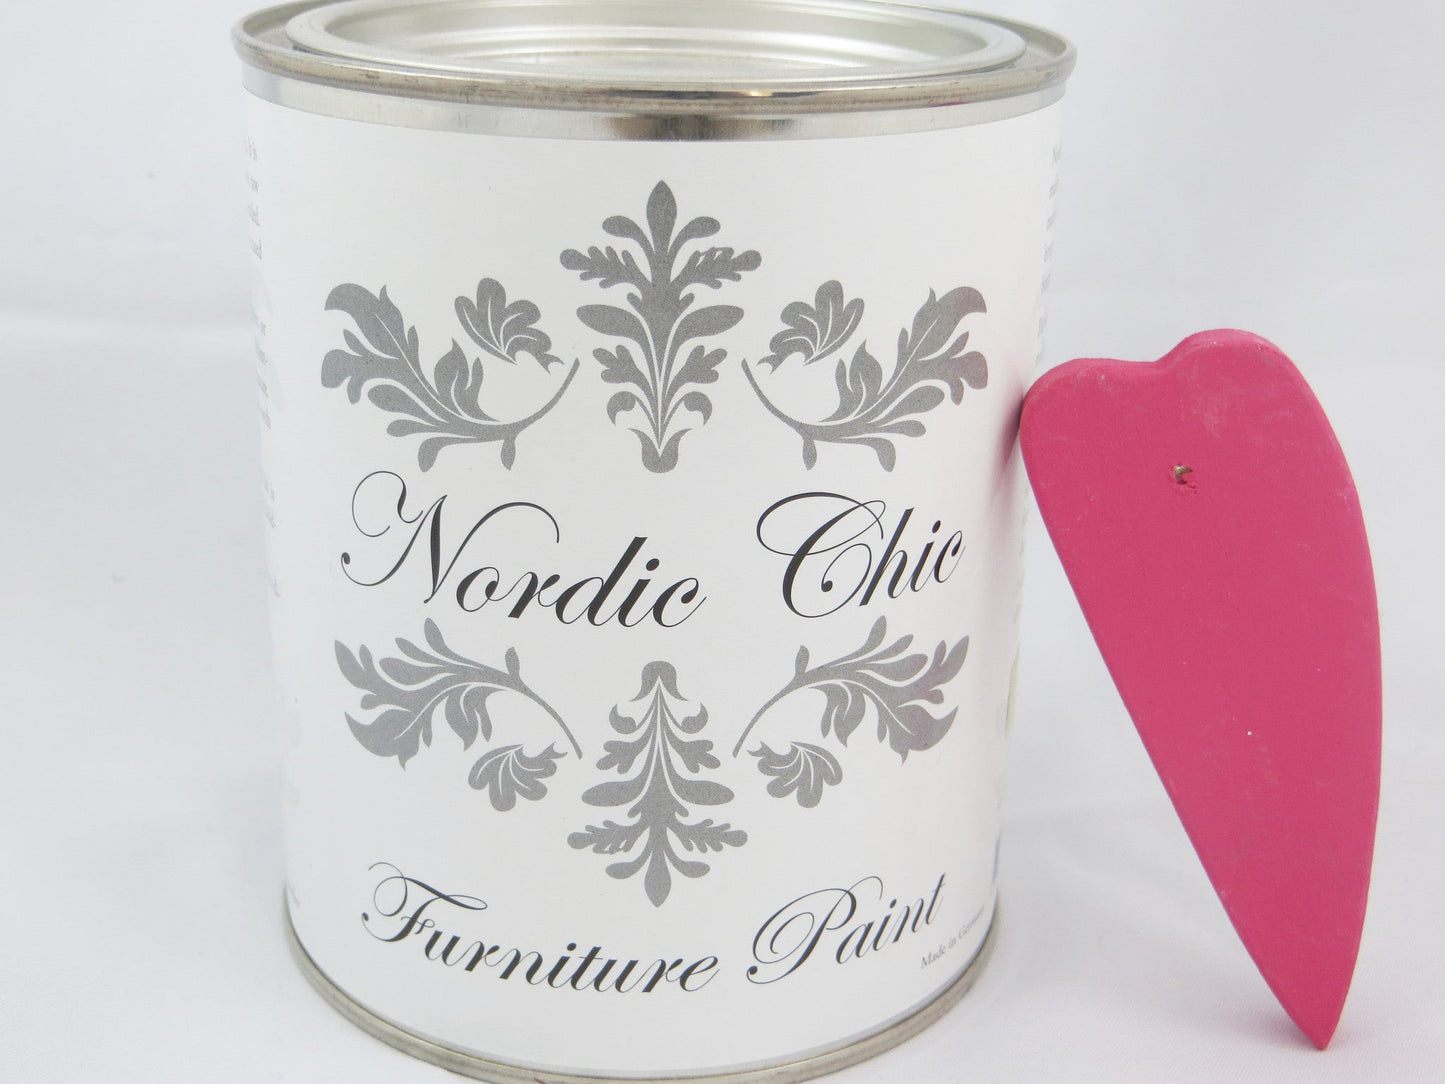 Nordic Chic Furniture Paint - Mum's Lipstick - Nordic Chic®